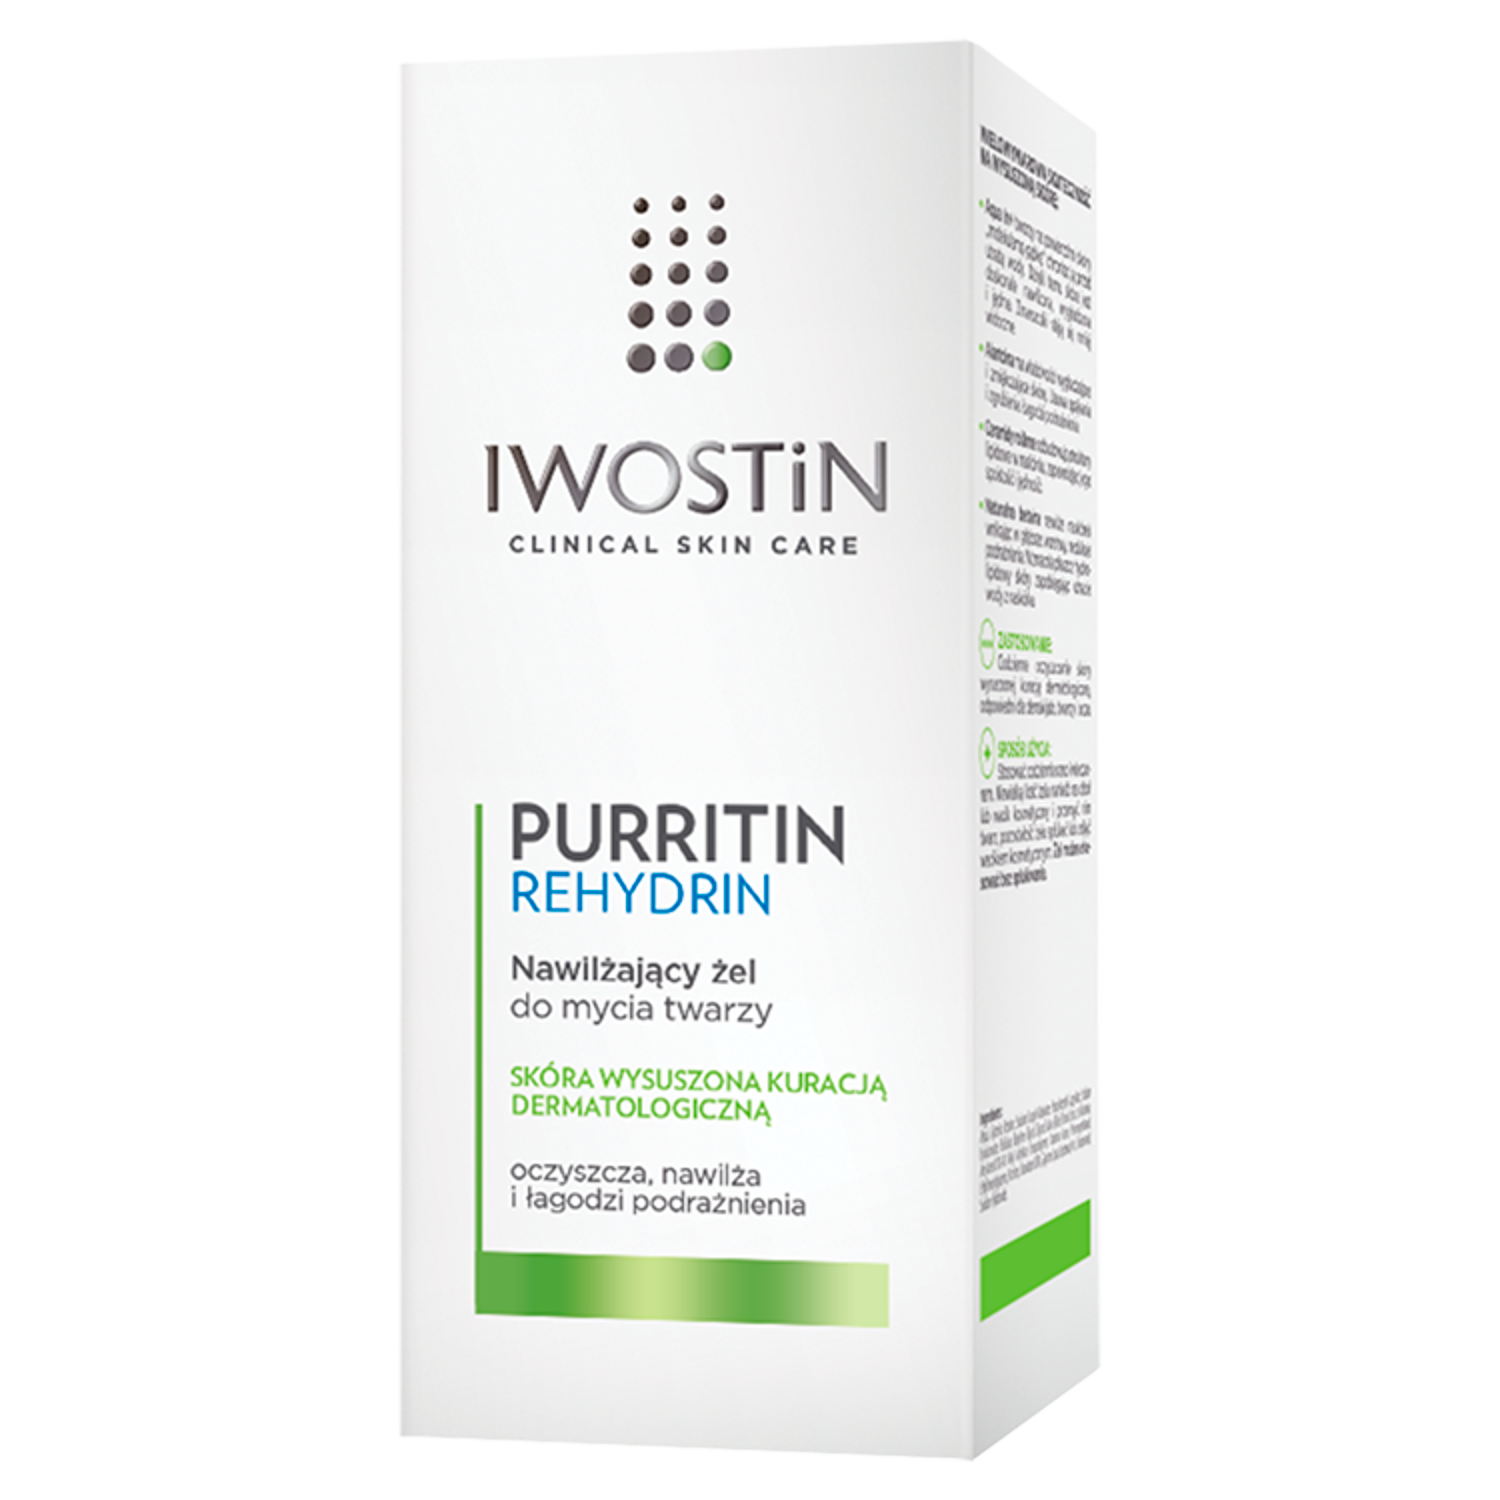 Iwostin Purritin Rehydrin увлажняющий гель для умывания лица, 150 мл